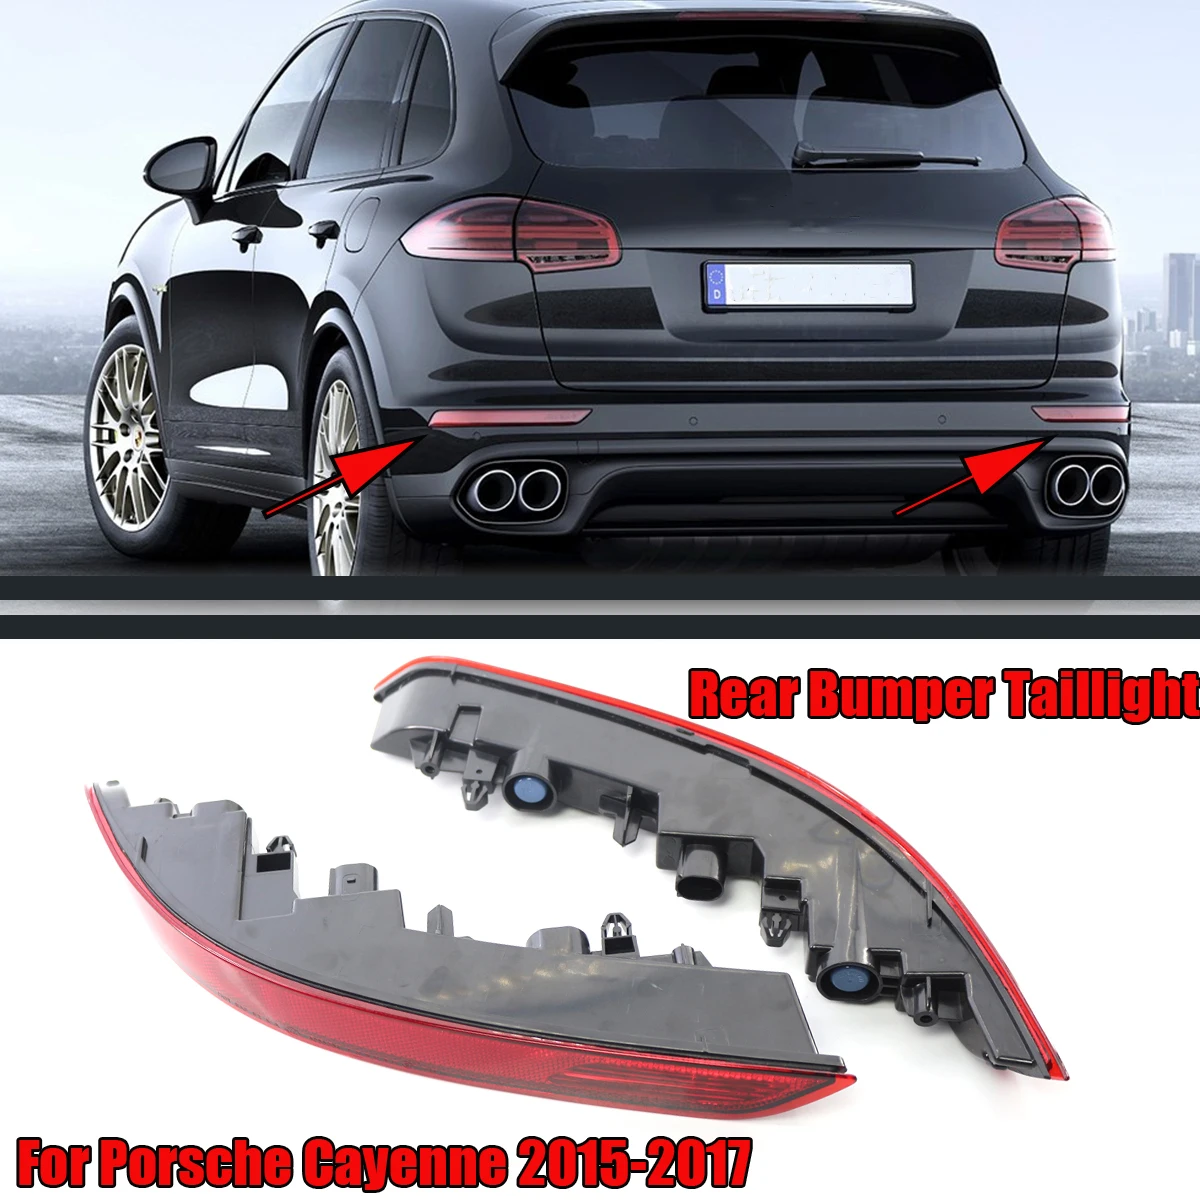 

Car Rear Bumper Taillight Reflector Light For Porsche Cayenne 2015-2017 95863110510 95863110610 Parking Brake Lamp Car Styling